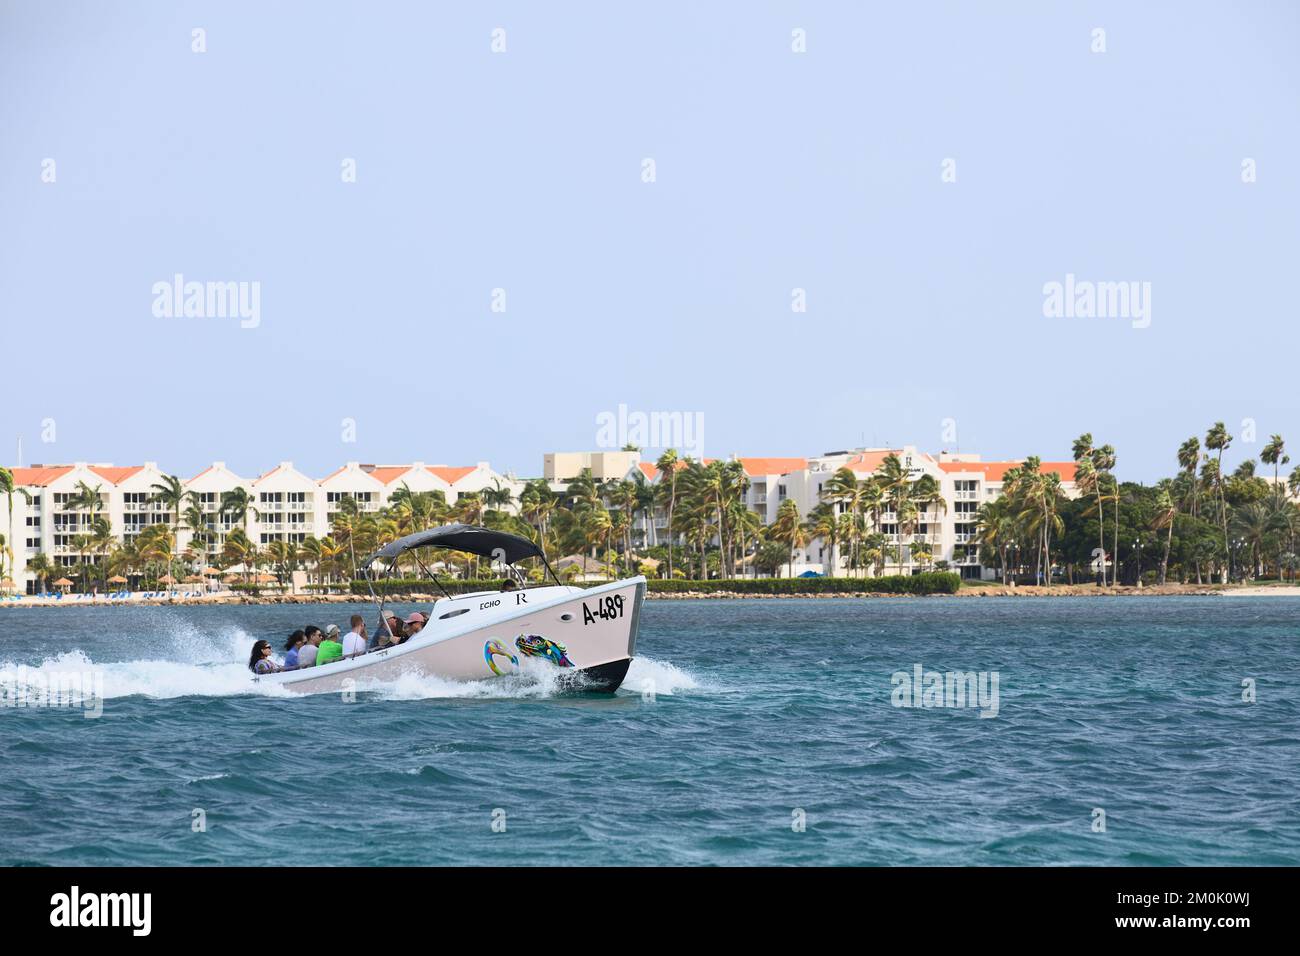 ORANJESTAD, ARUBA - MARCH 27, 2022: Water taxi taking guests to the private Renaissance island along Surfside beach in Oranjestad on Aruba Stock Photo